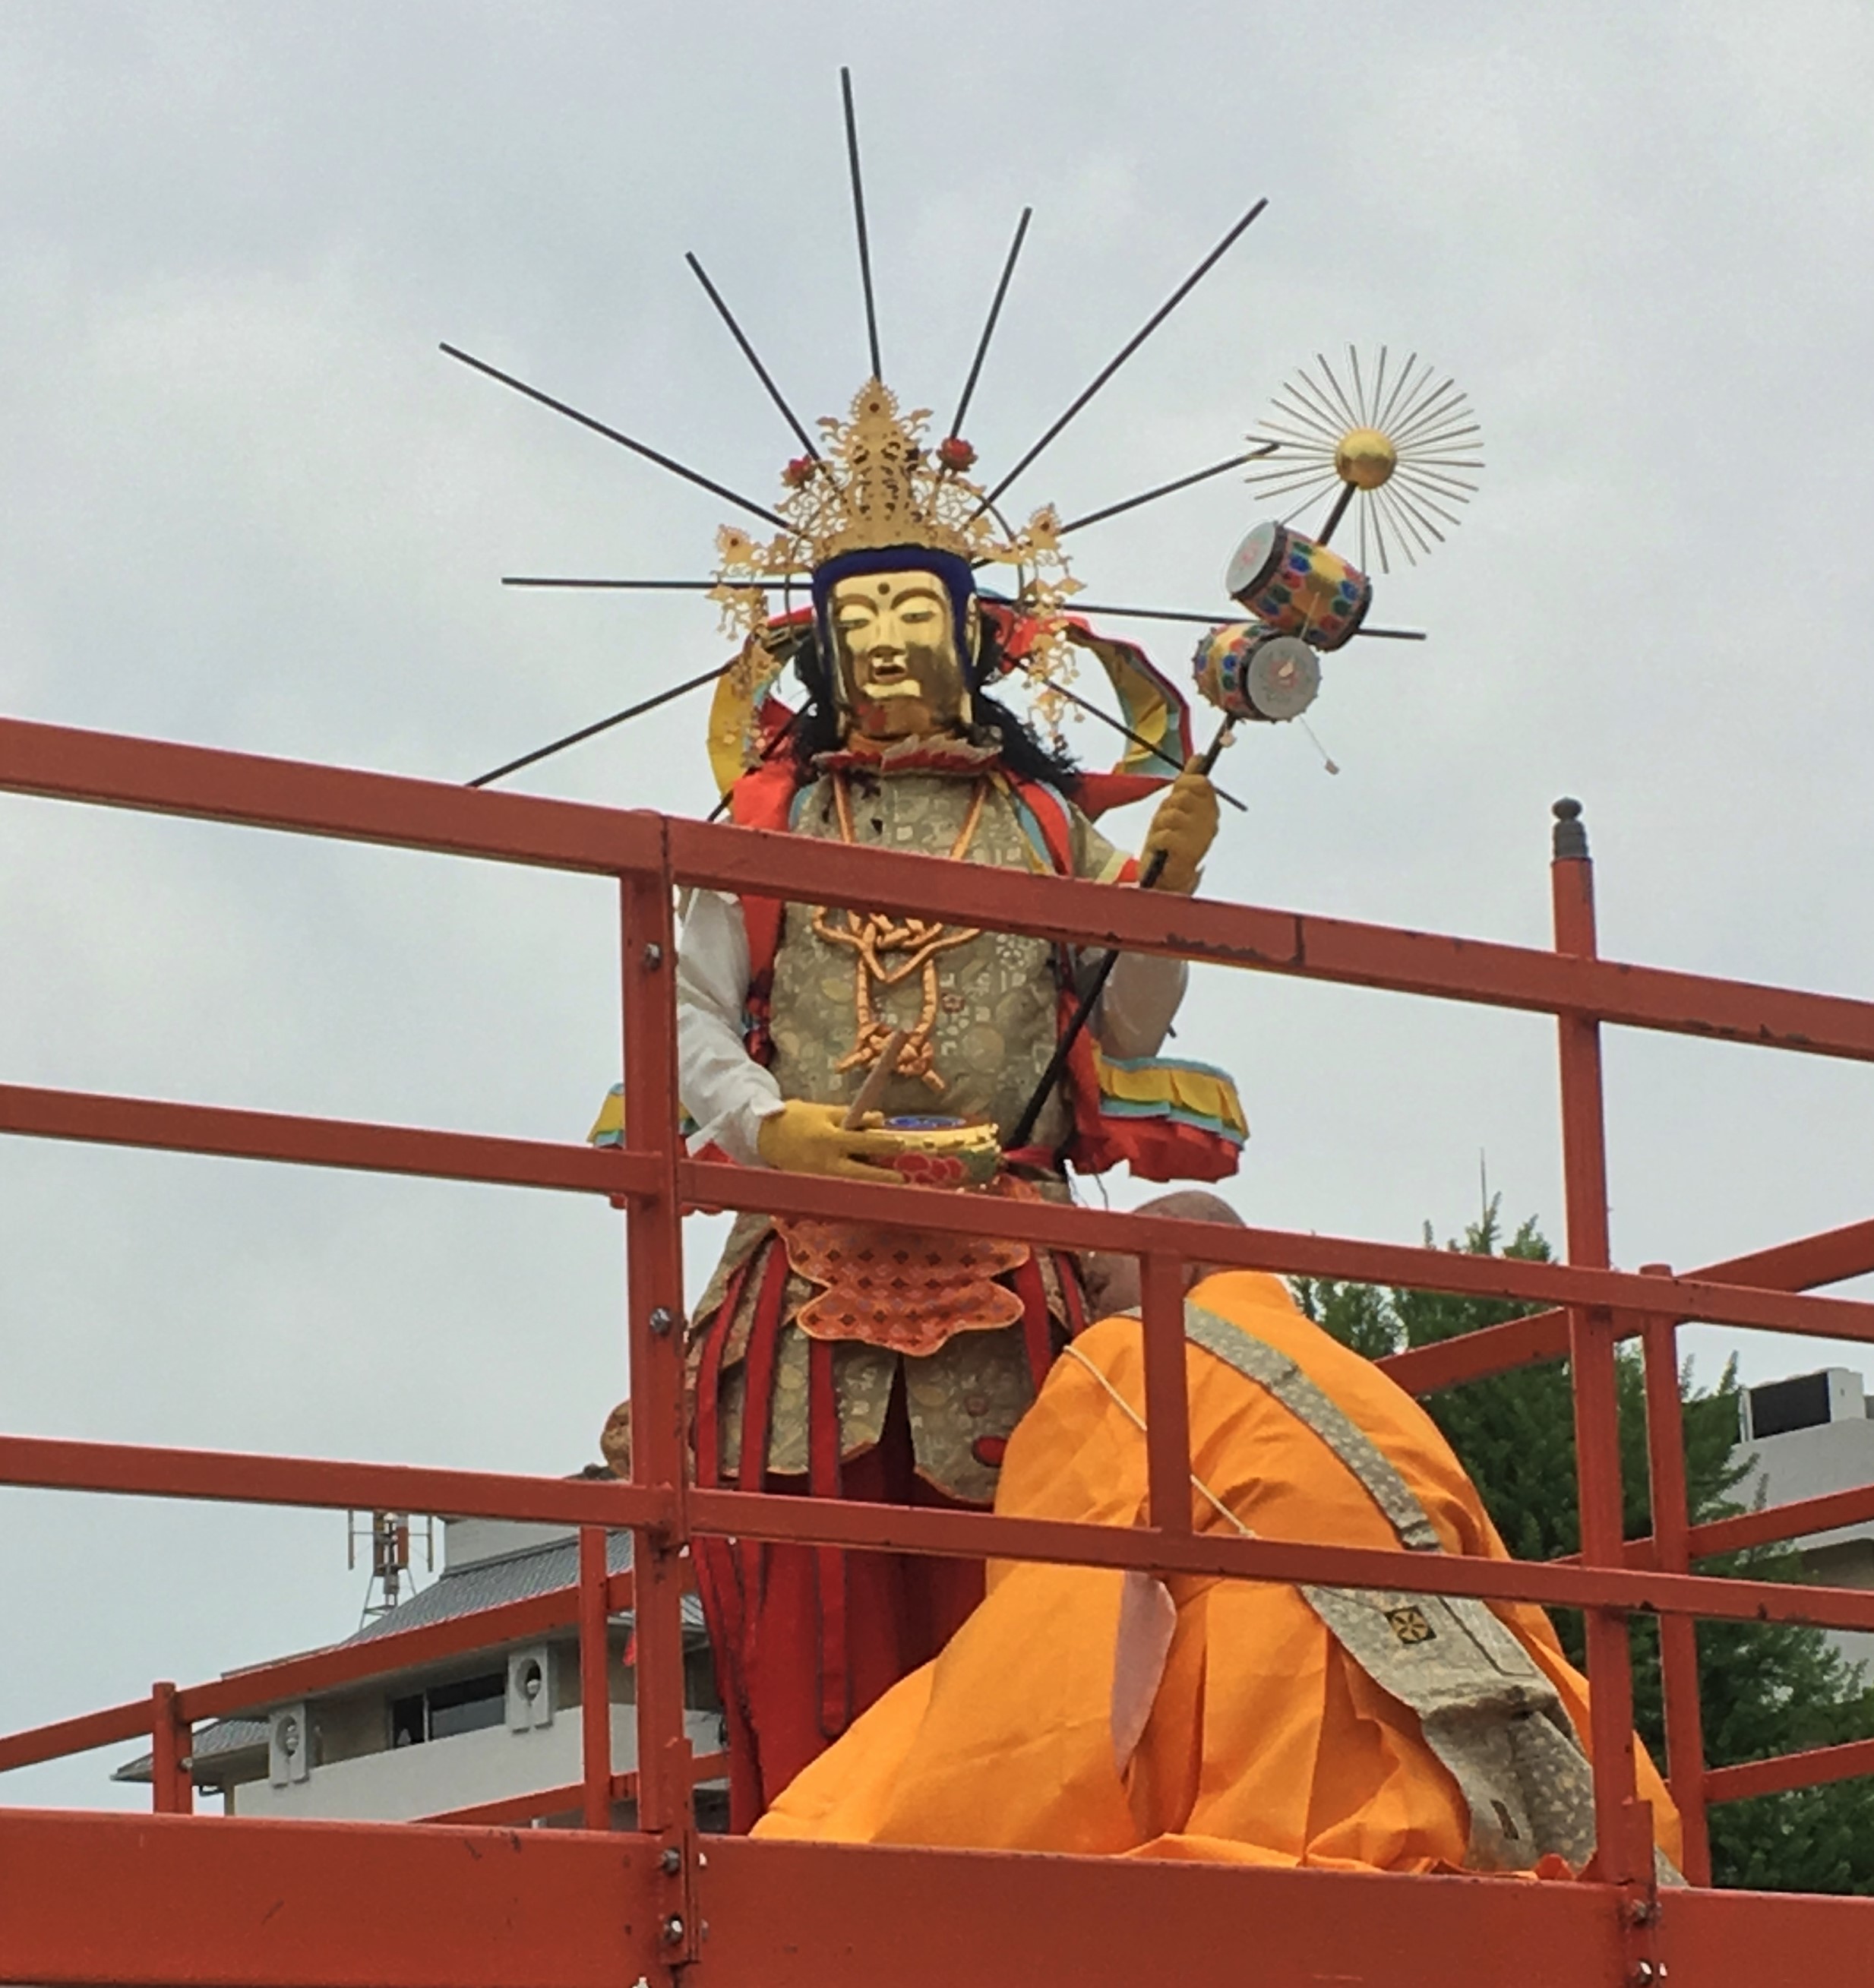 A pbuddhist priest dressed in orange kneeling before a man dressed as a bosatsu